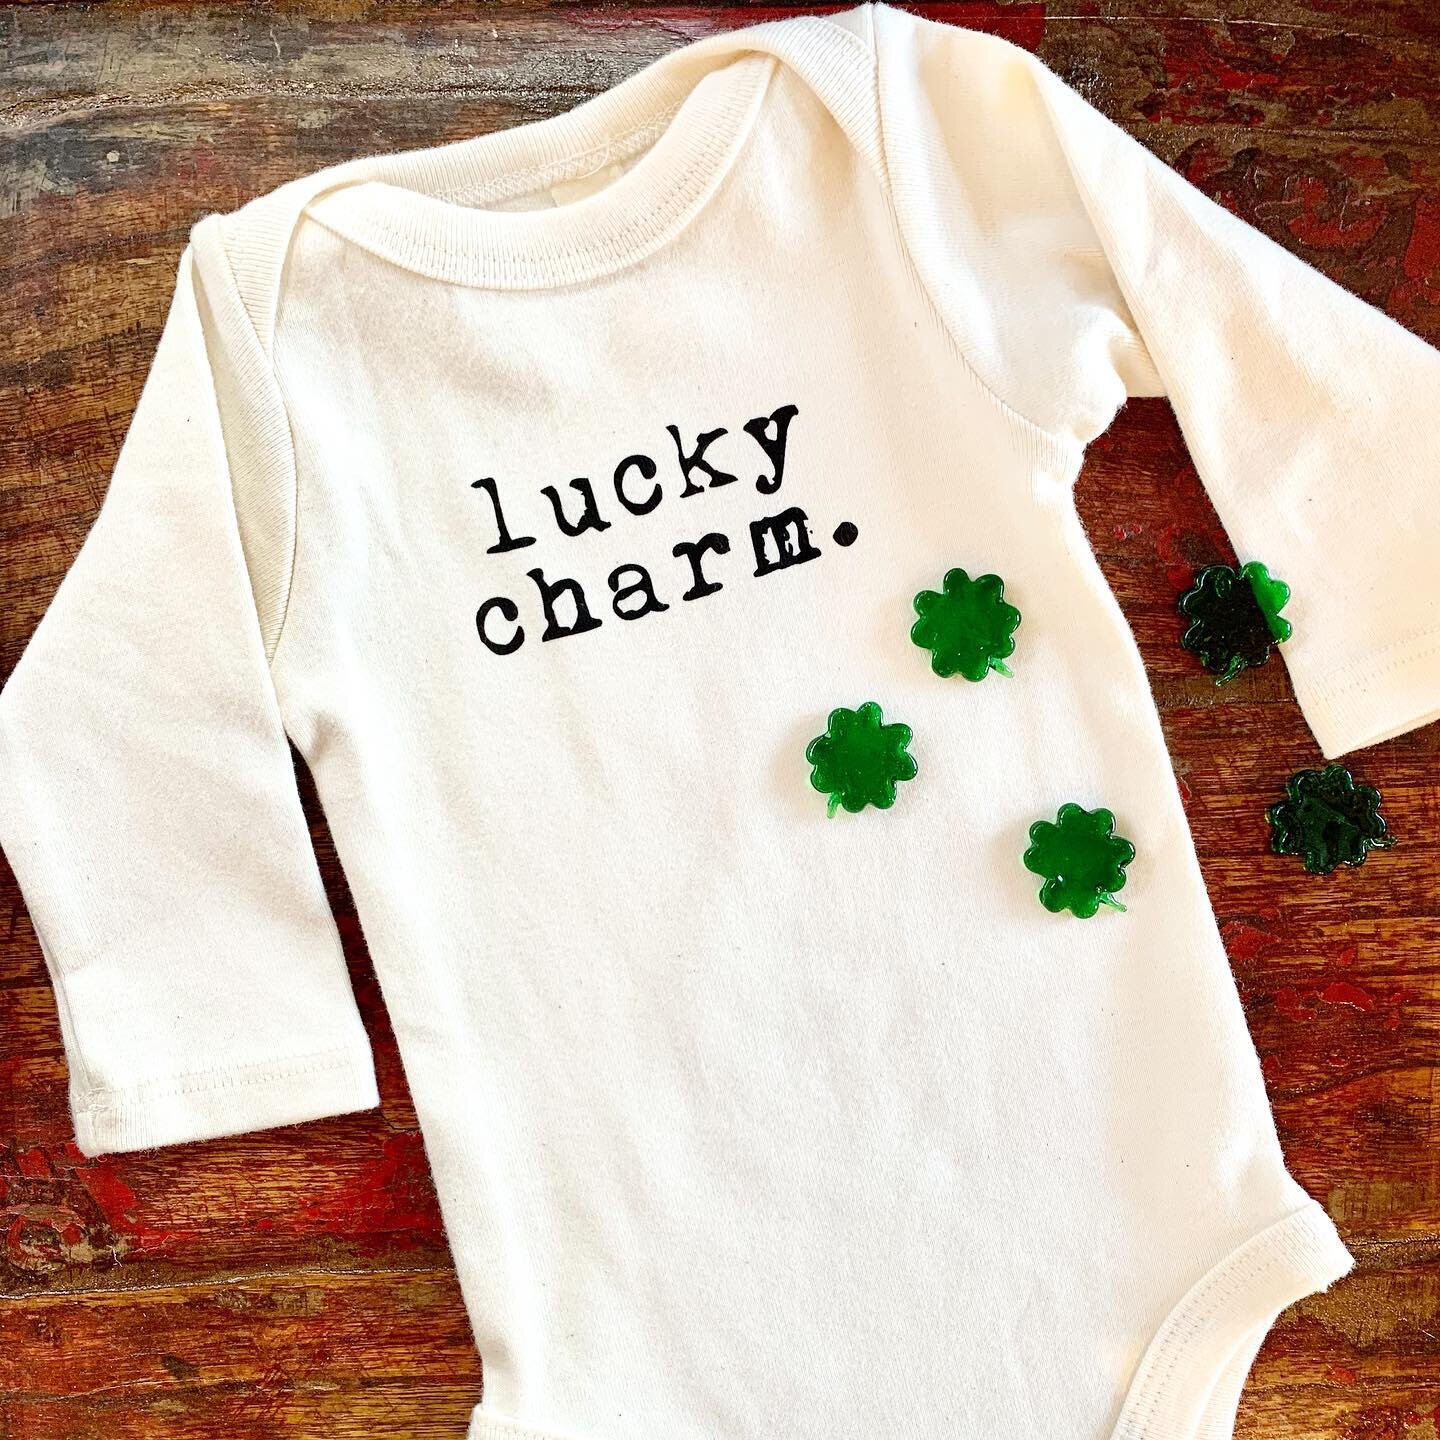 Celebrate your Lucky Charm, March 17th!  #stpatricksday #stpattysday #babylove #luckycharm #4leafclover #luck #cuteonesie #giftforbaby #locallove #shopstudiocity #emeraldforest